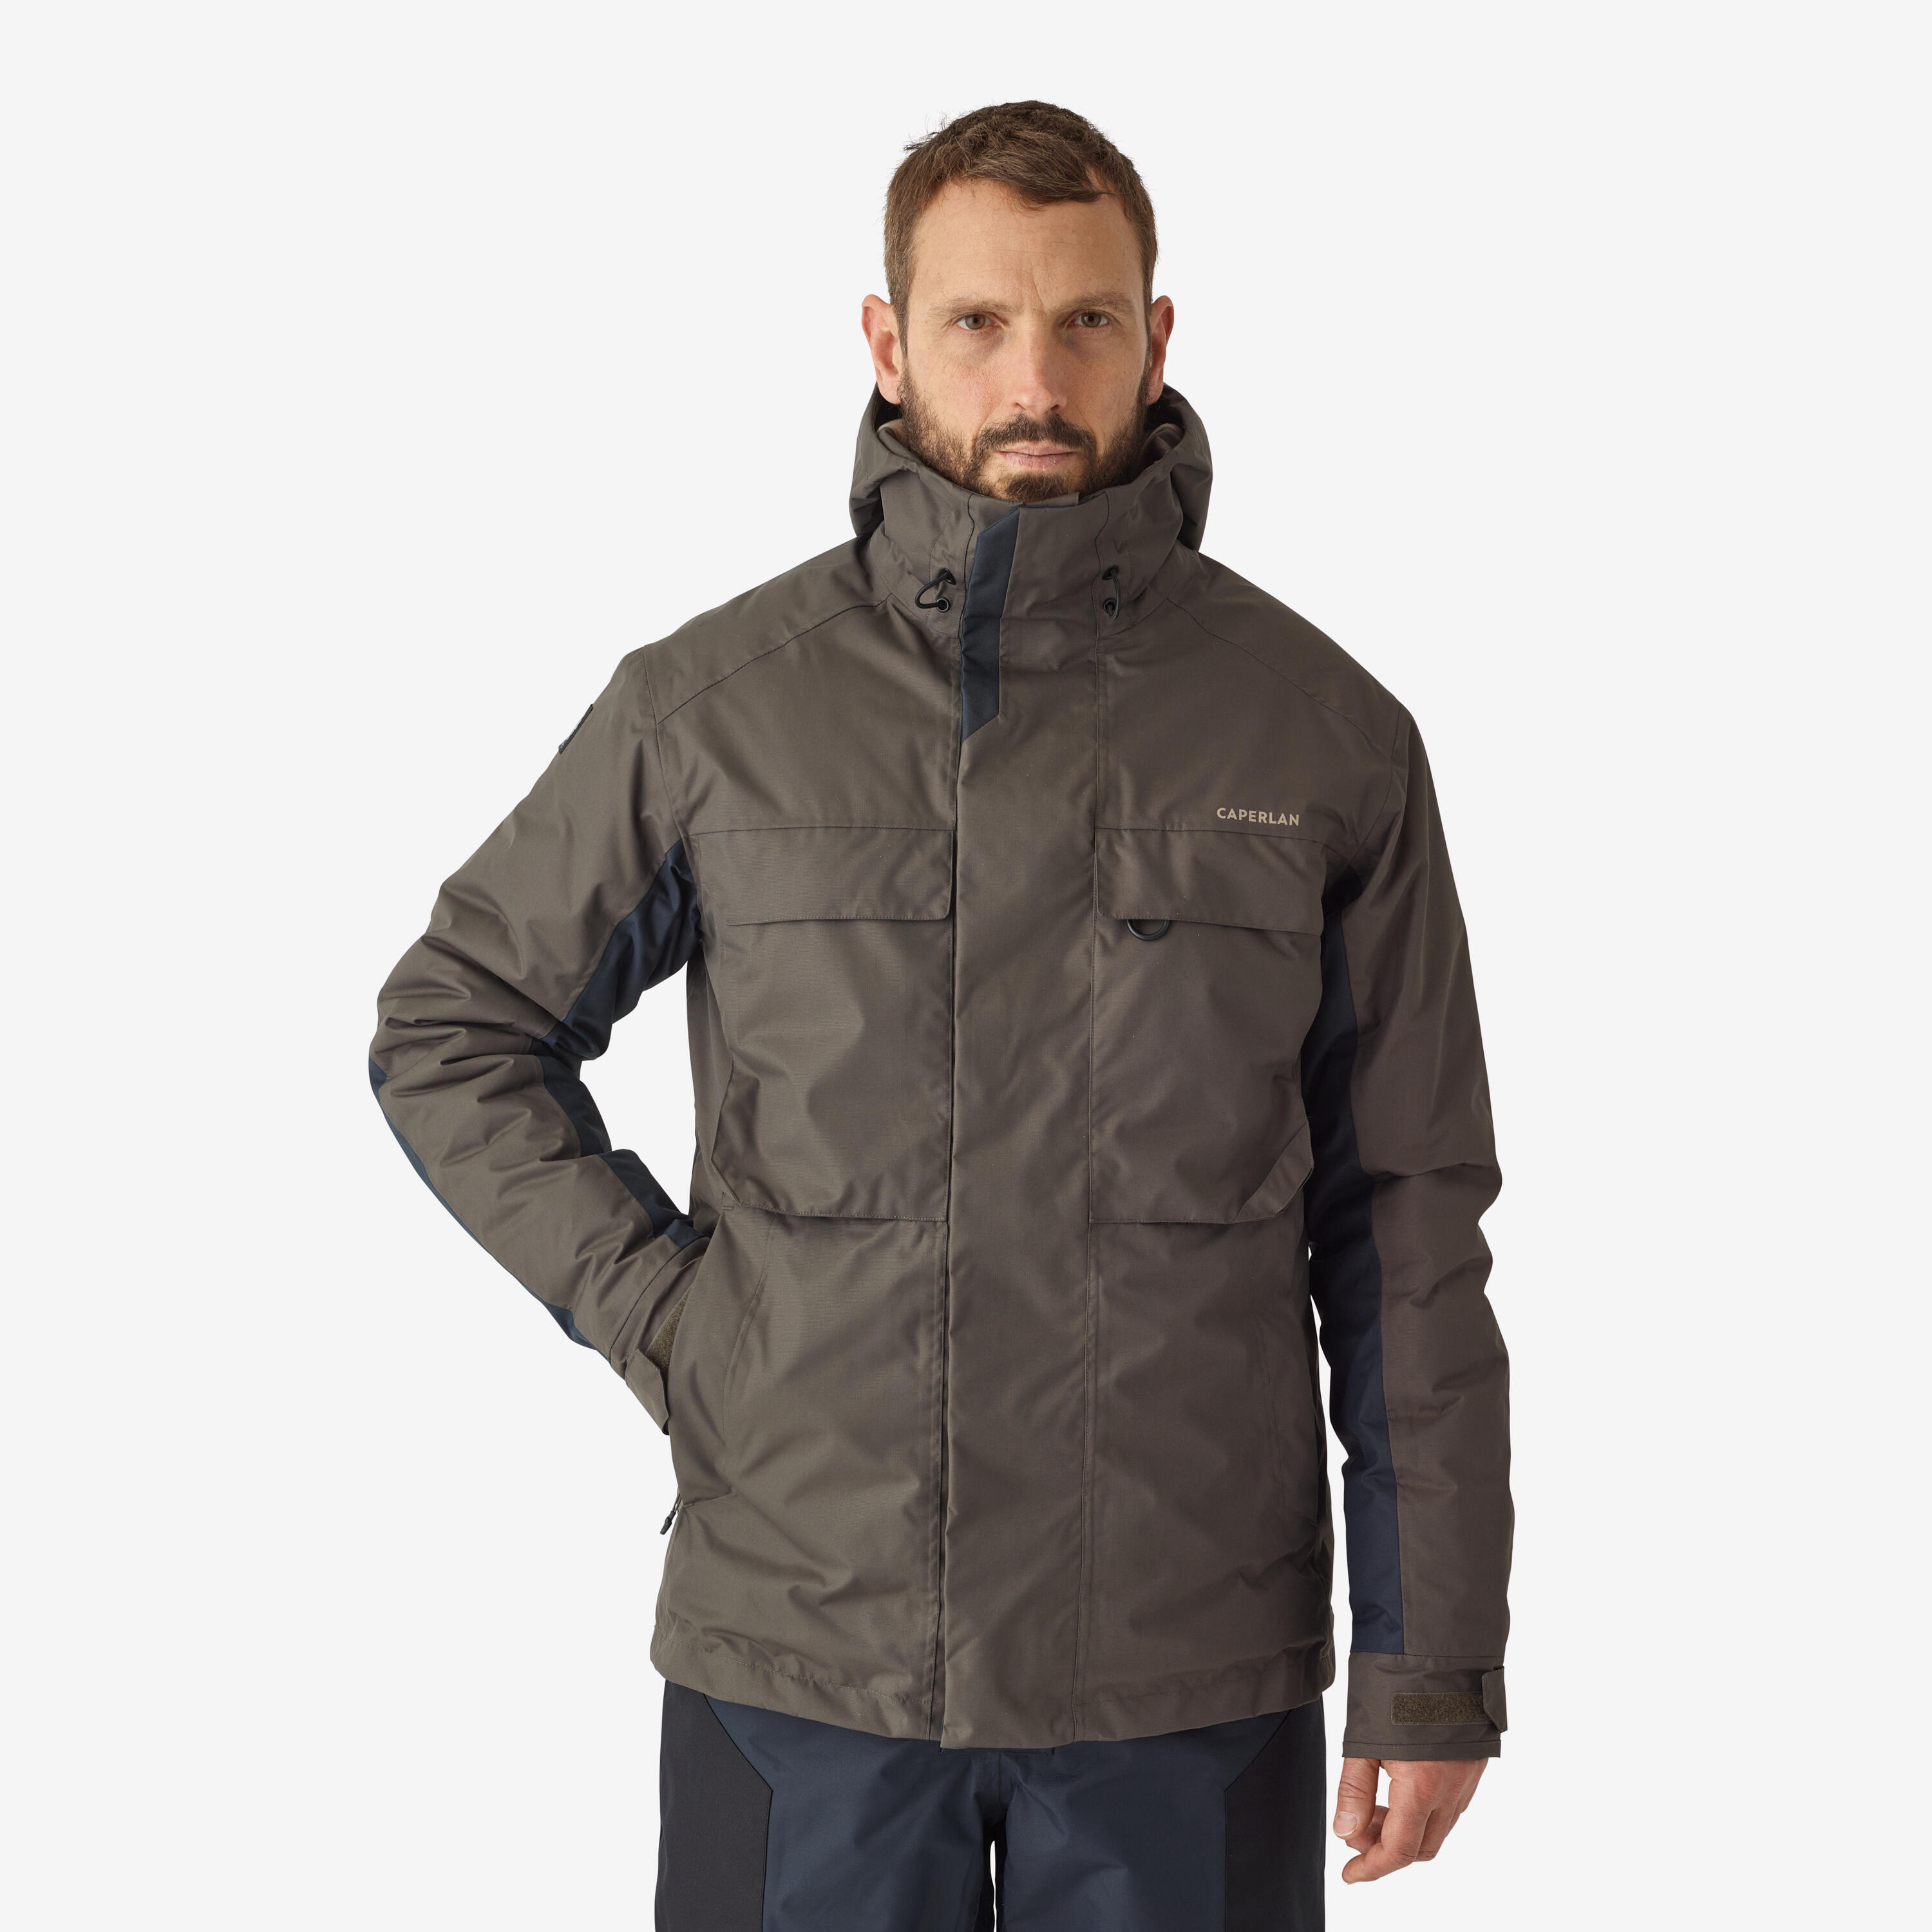 CAPERLAN Men's warm waterproof fishing jacket - FJ 500 TH khaki